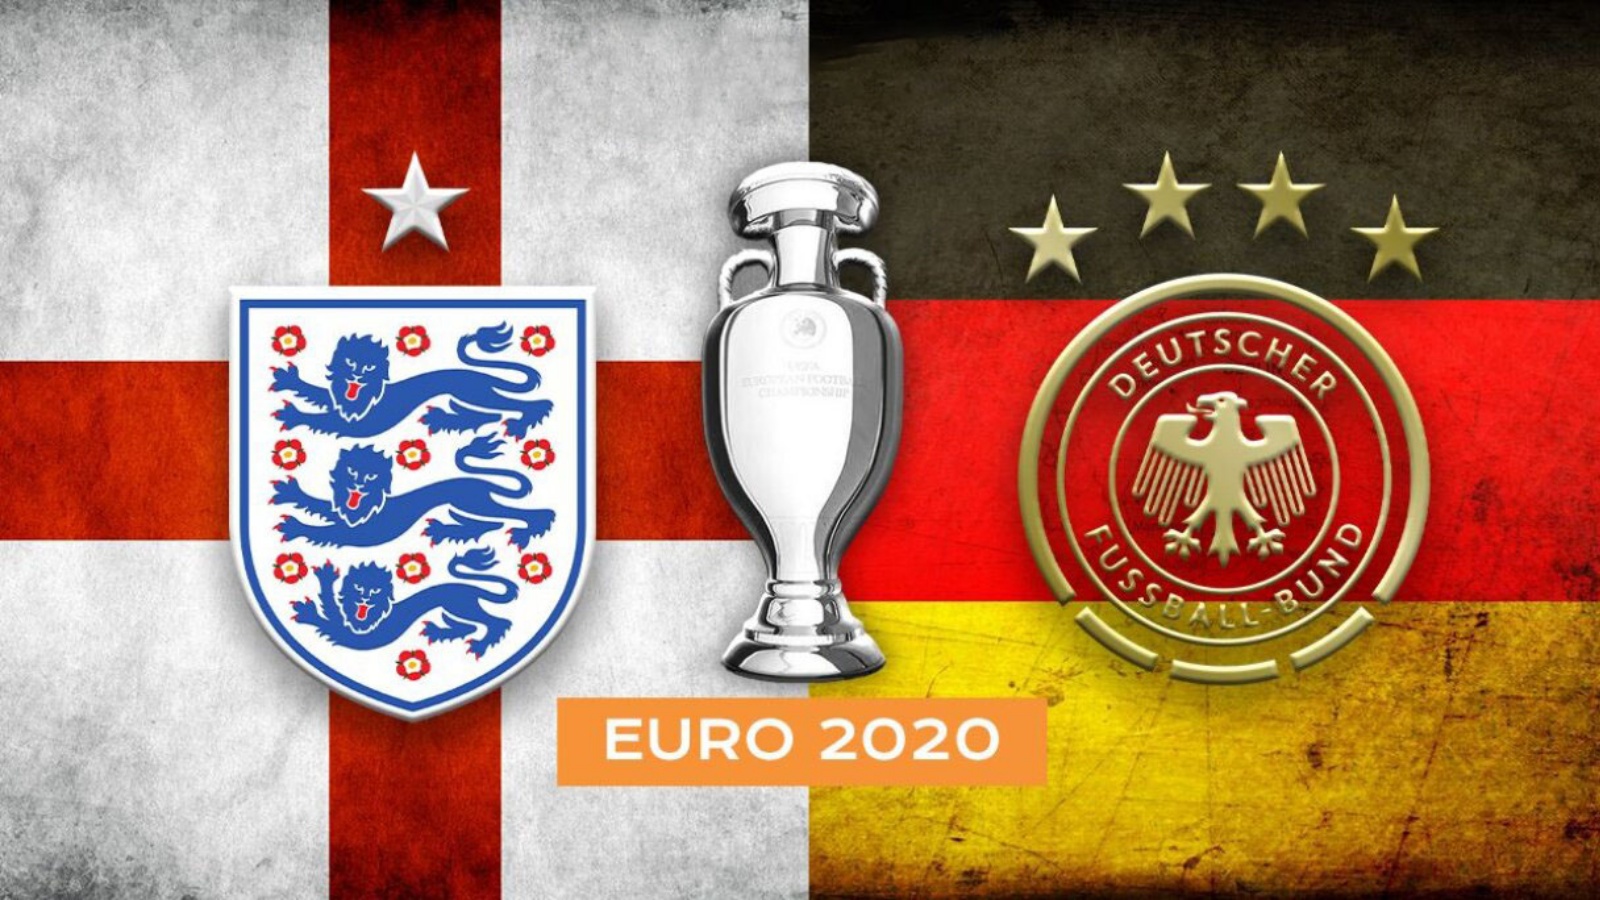 INGHILTERRA - GERMANIA PRO TV LIVE EURO 2020